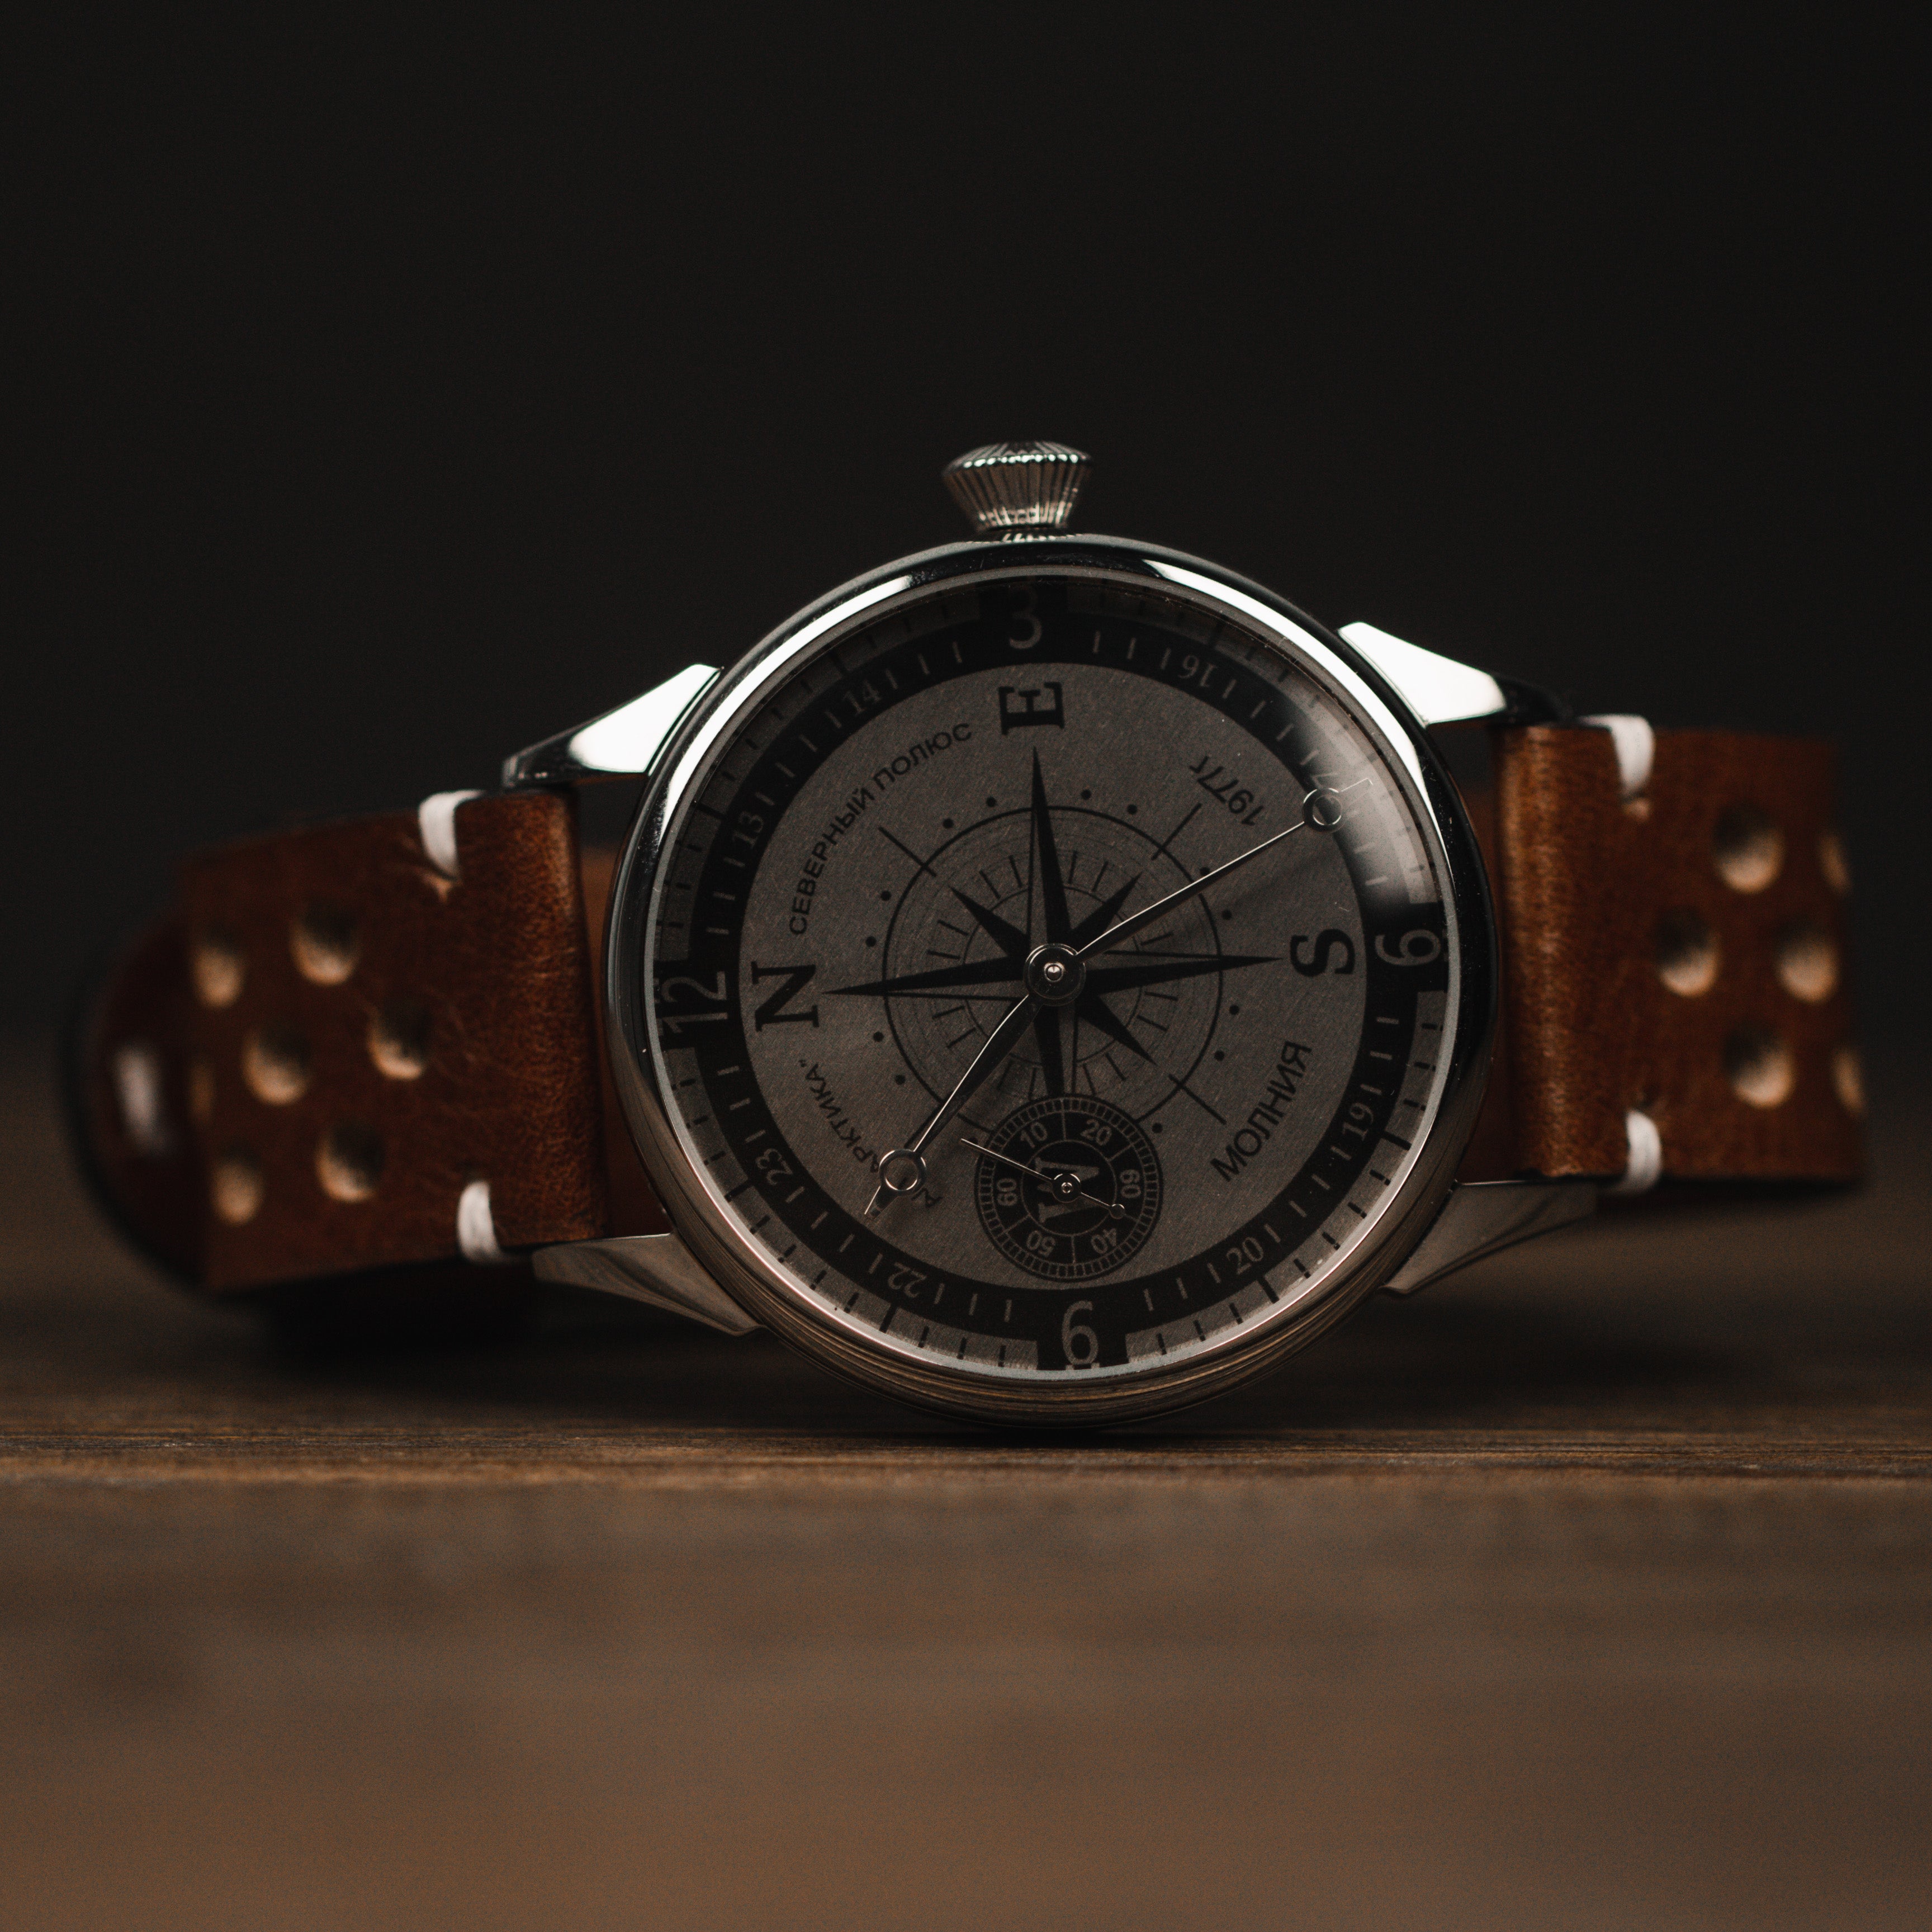 Very rare vintage soviet watch for men Molnija with leather nato strap